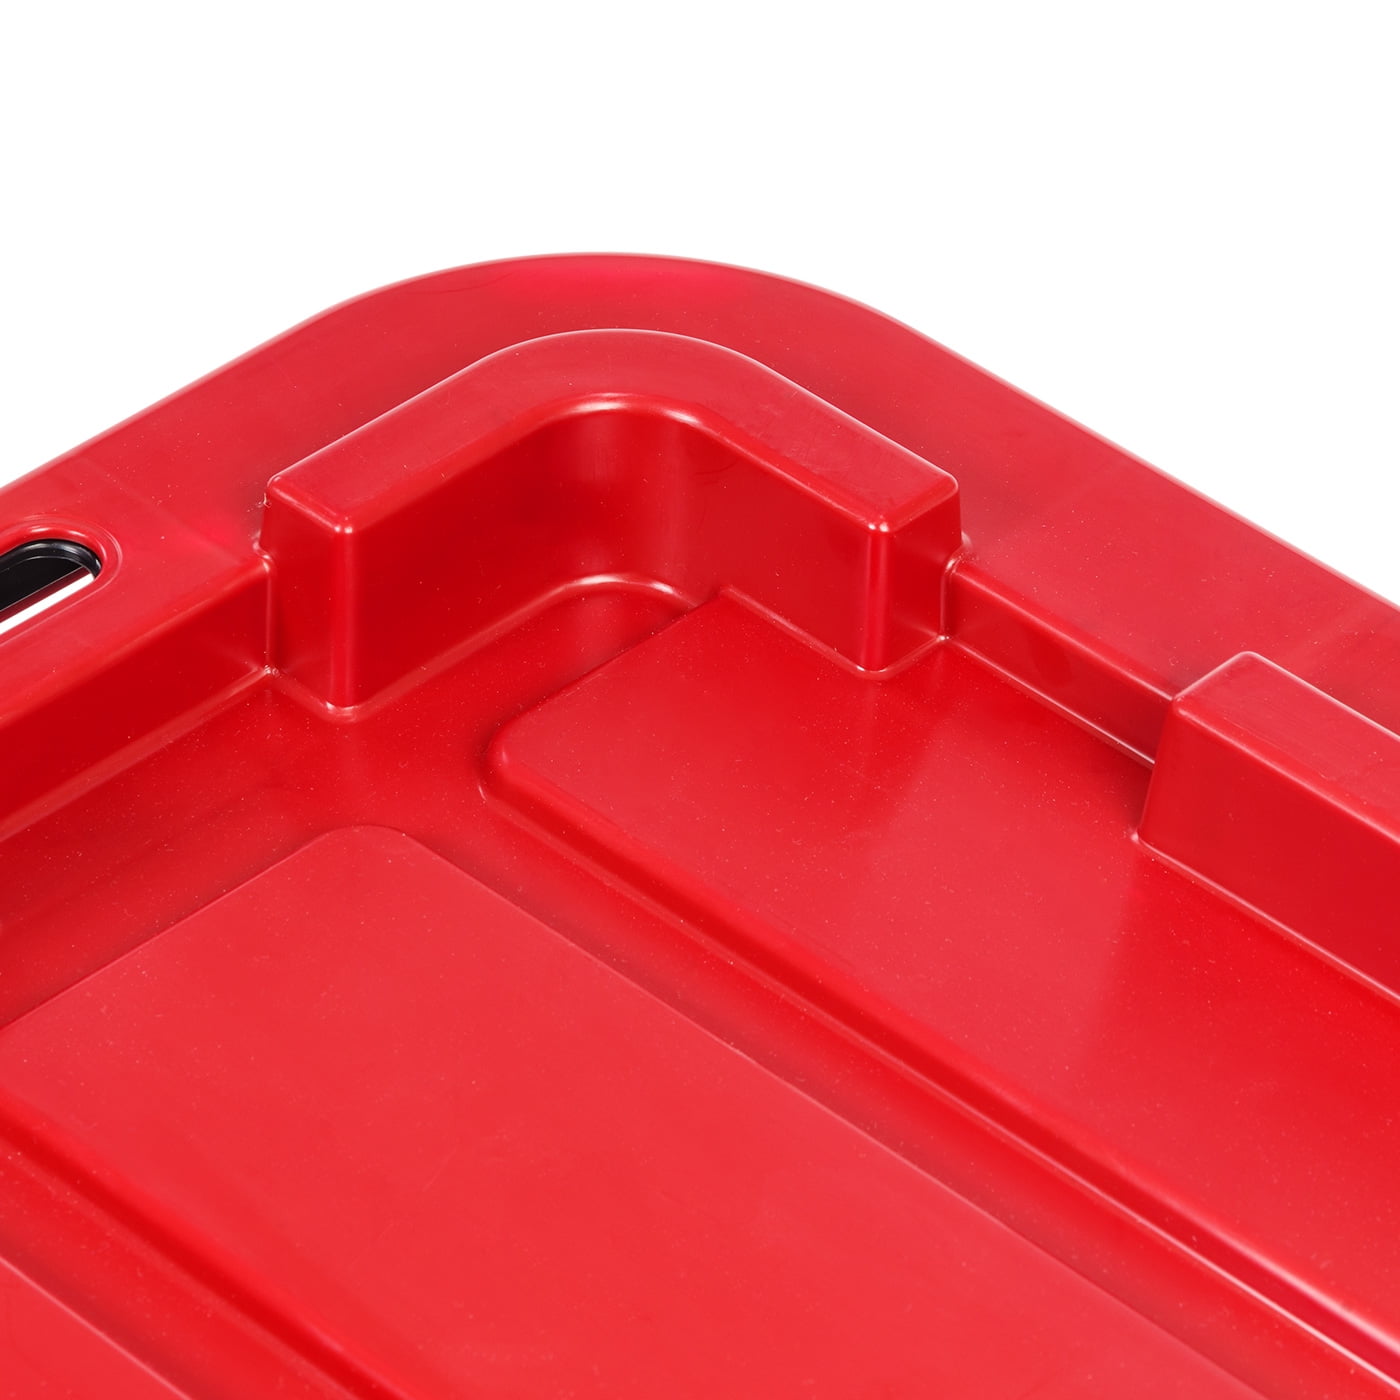 100 Quart BRK/RED Stackble Tough Storage Box [ Pack of 3